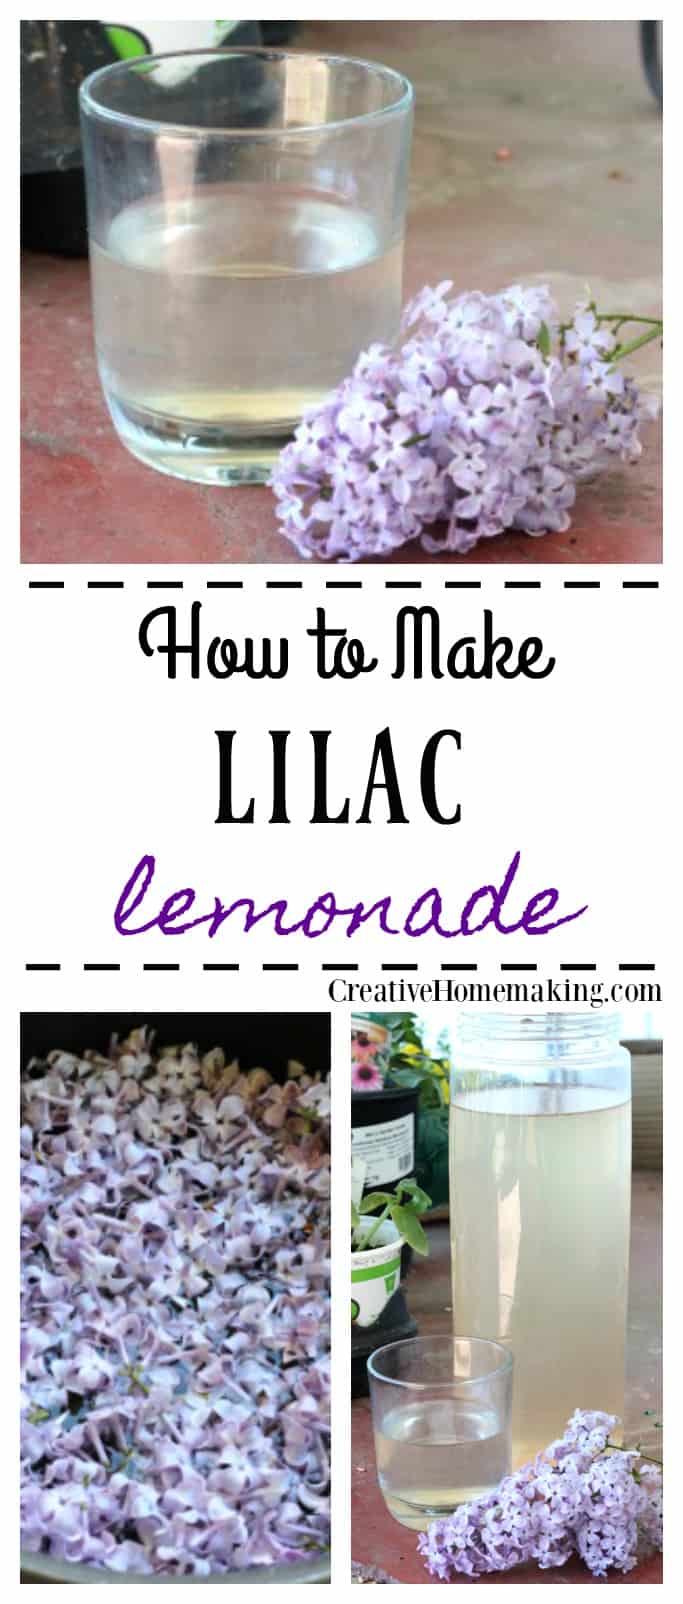 Lilac Lemonade - Creative Homemaking